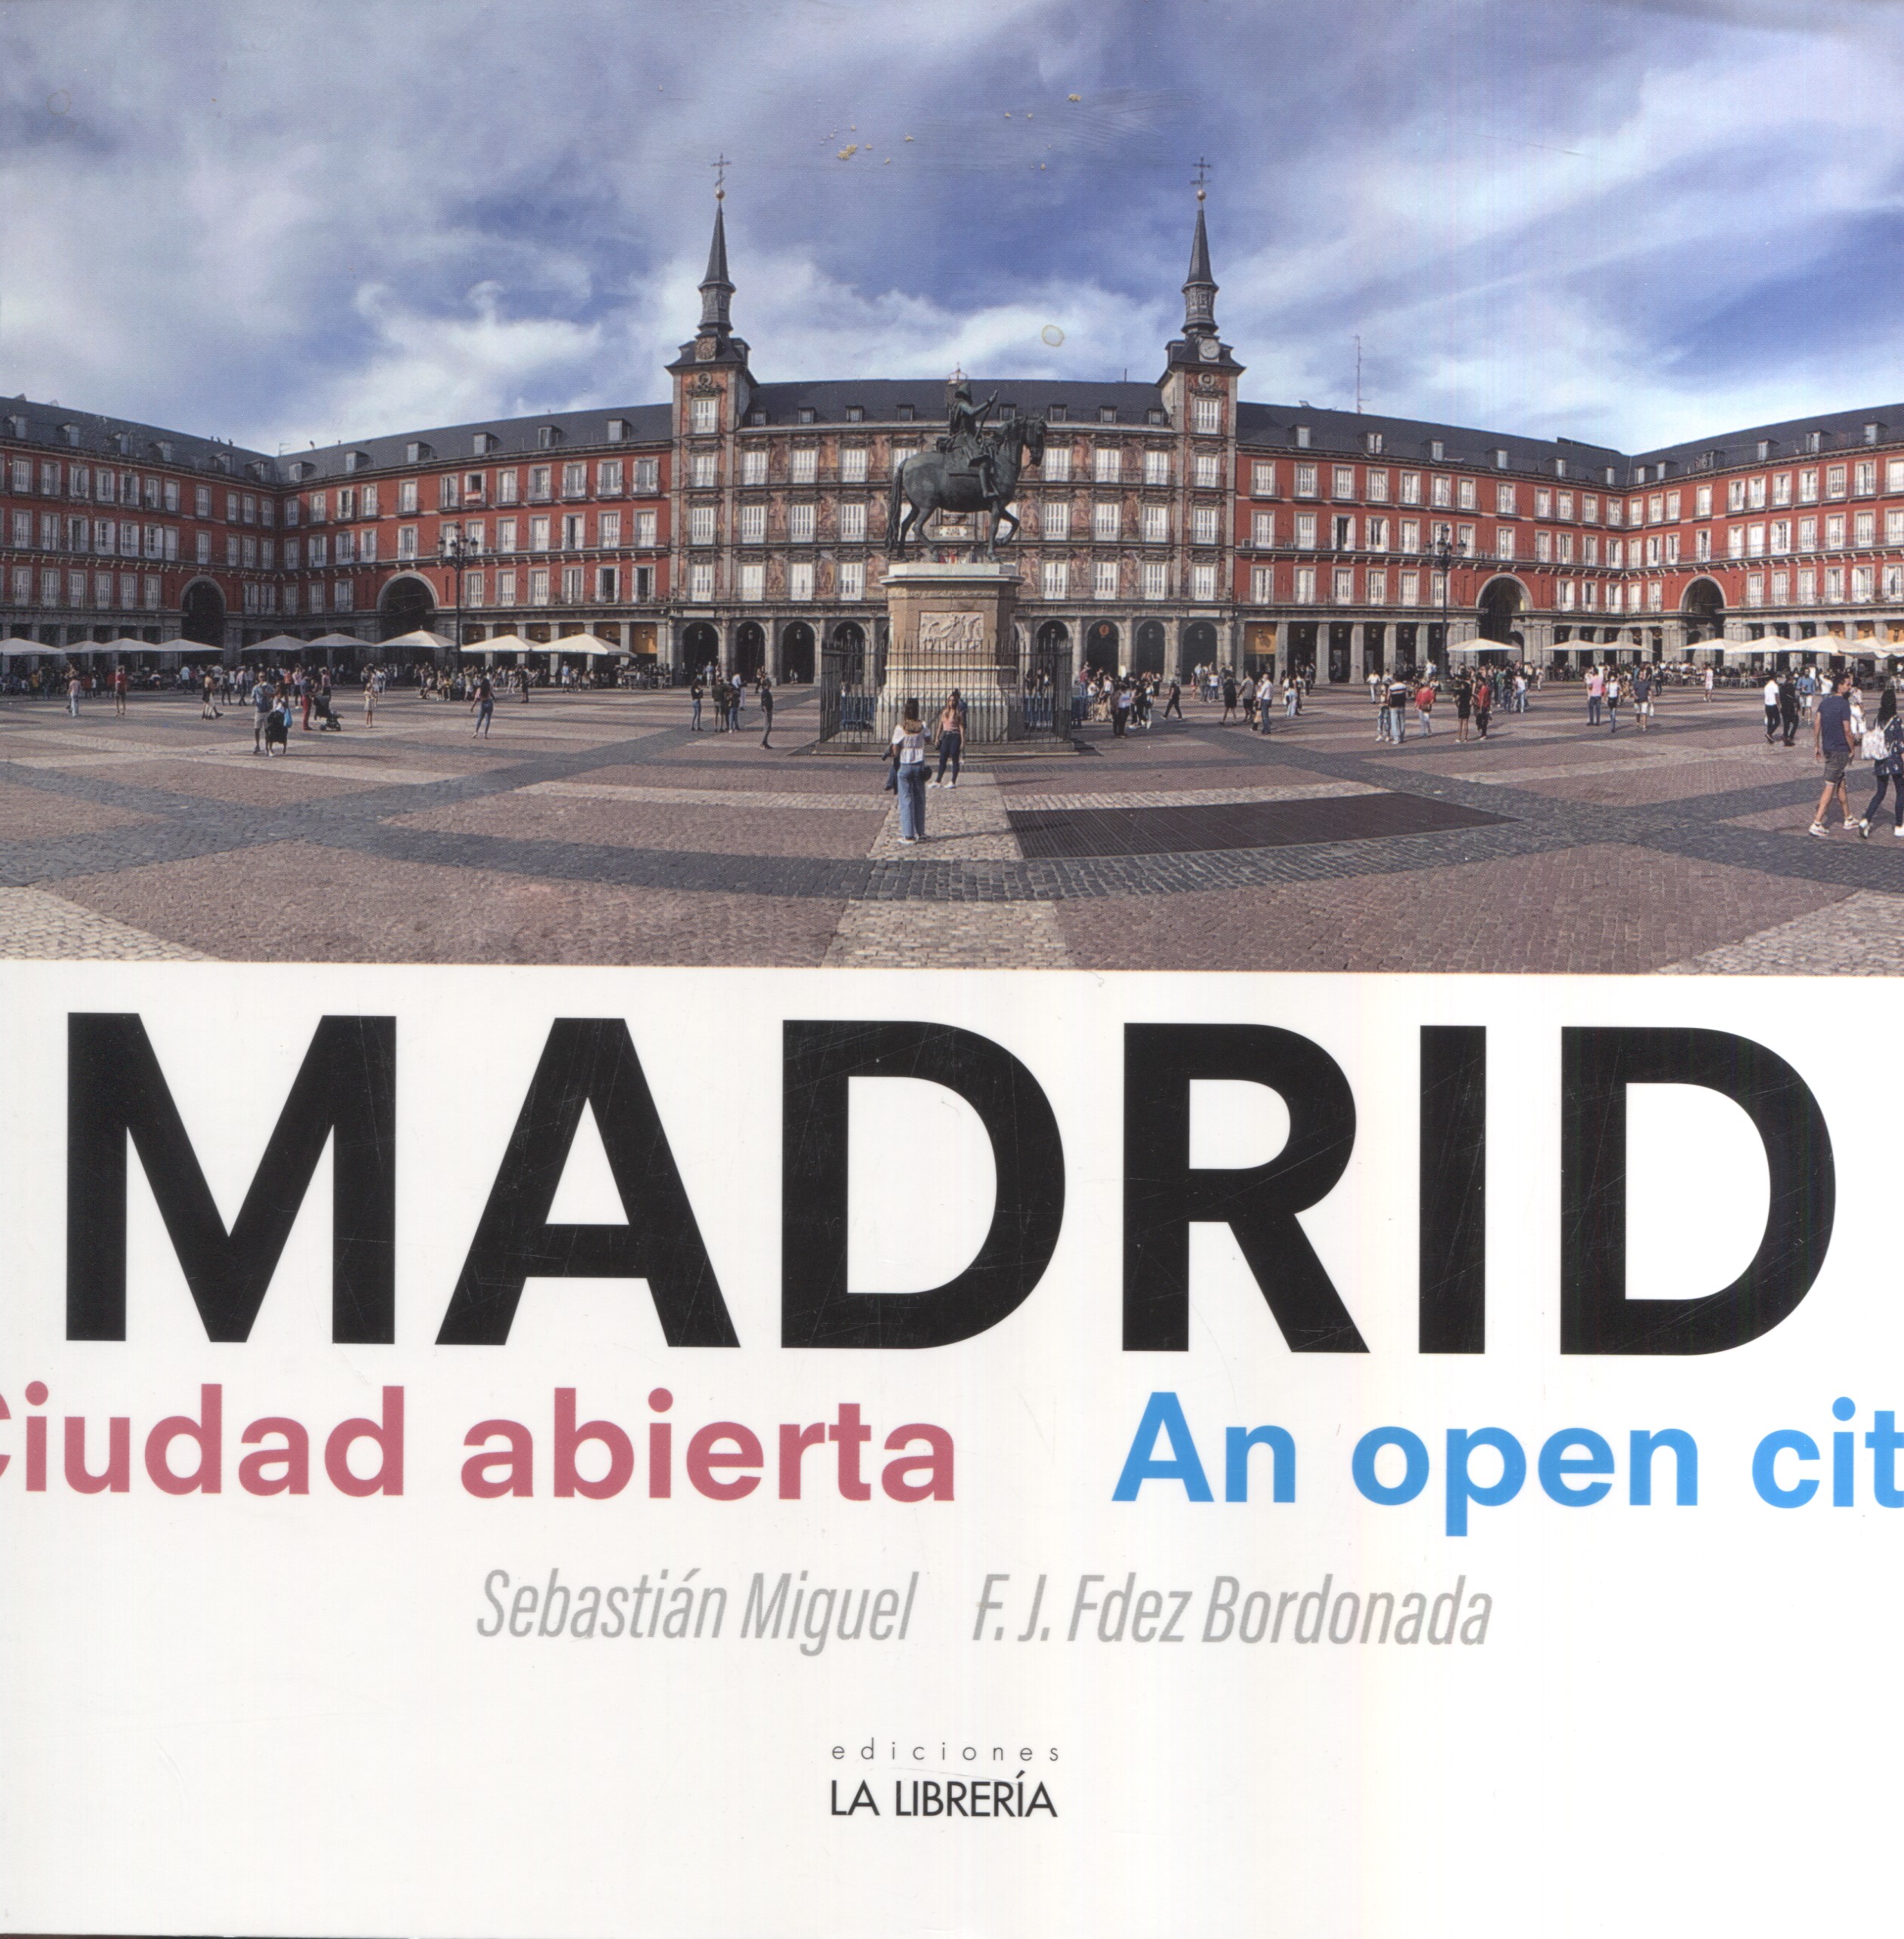 Madrid ciudad abierta